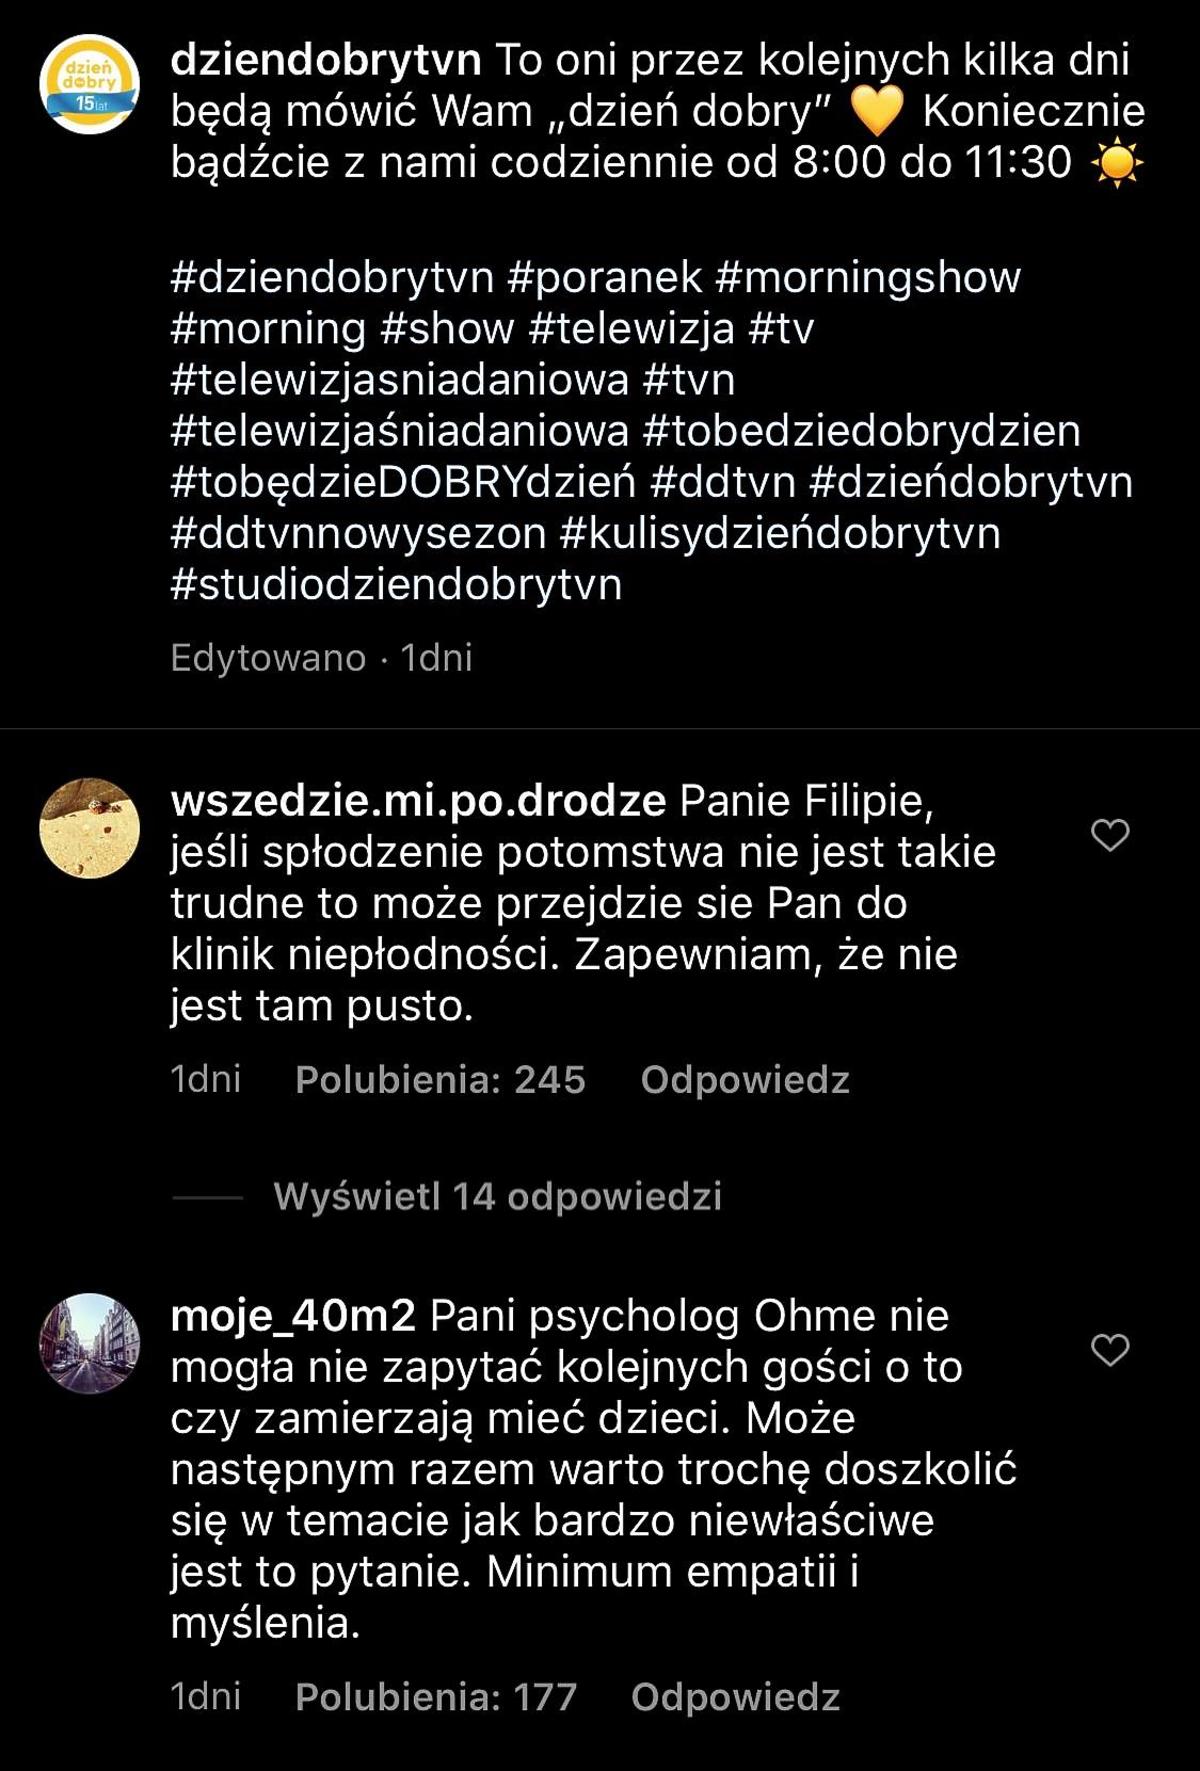 Komentarze obserwatorek na profilu DDTVN